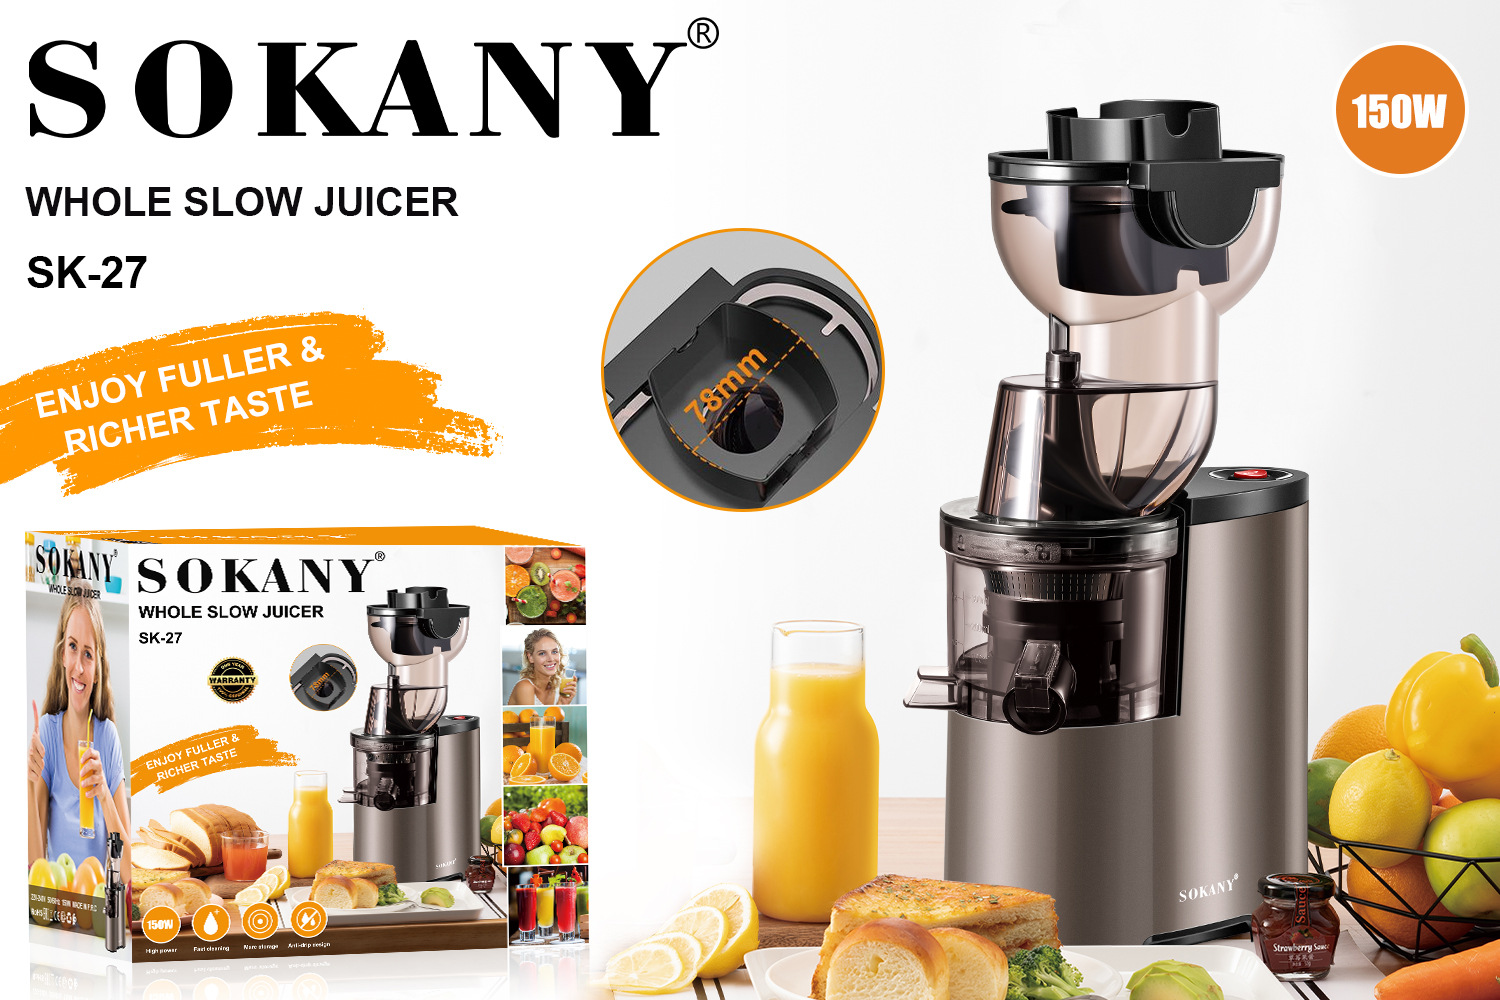 SOKANY 27 Slow Juicer Household Slag Juice Separation Fruits and Vegetables Multifunctional Juicer